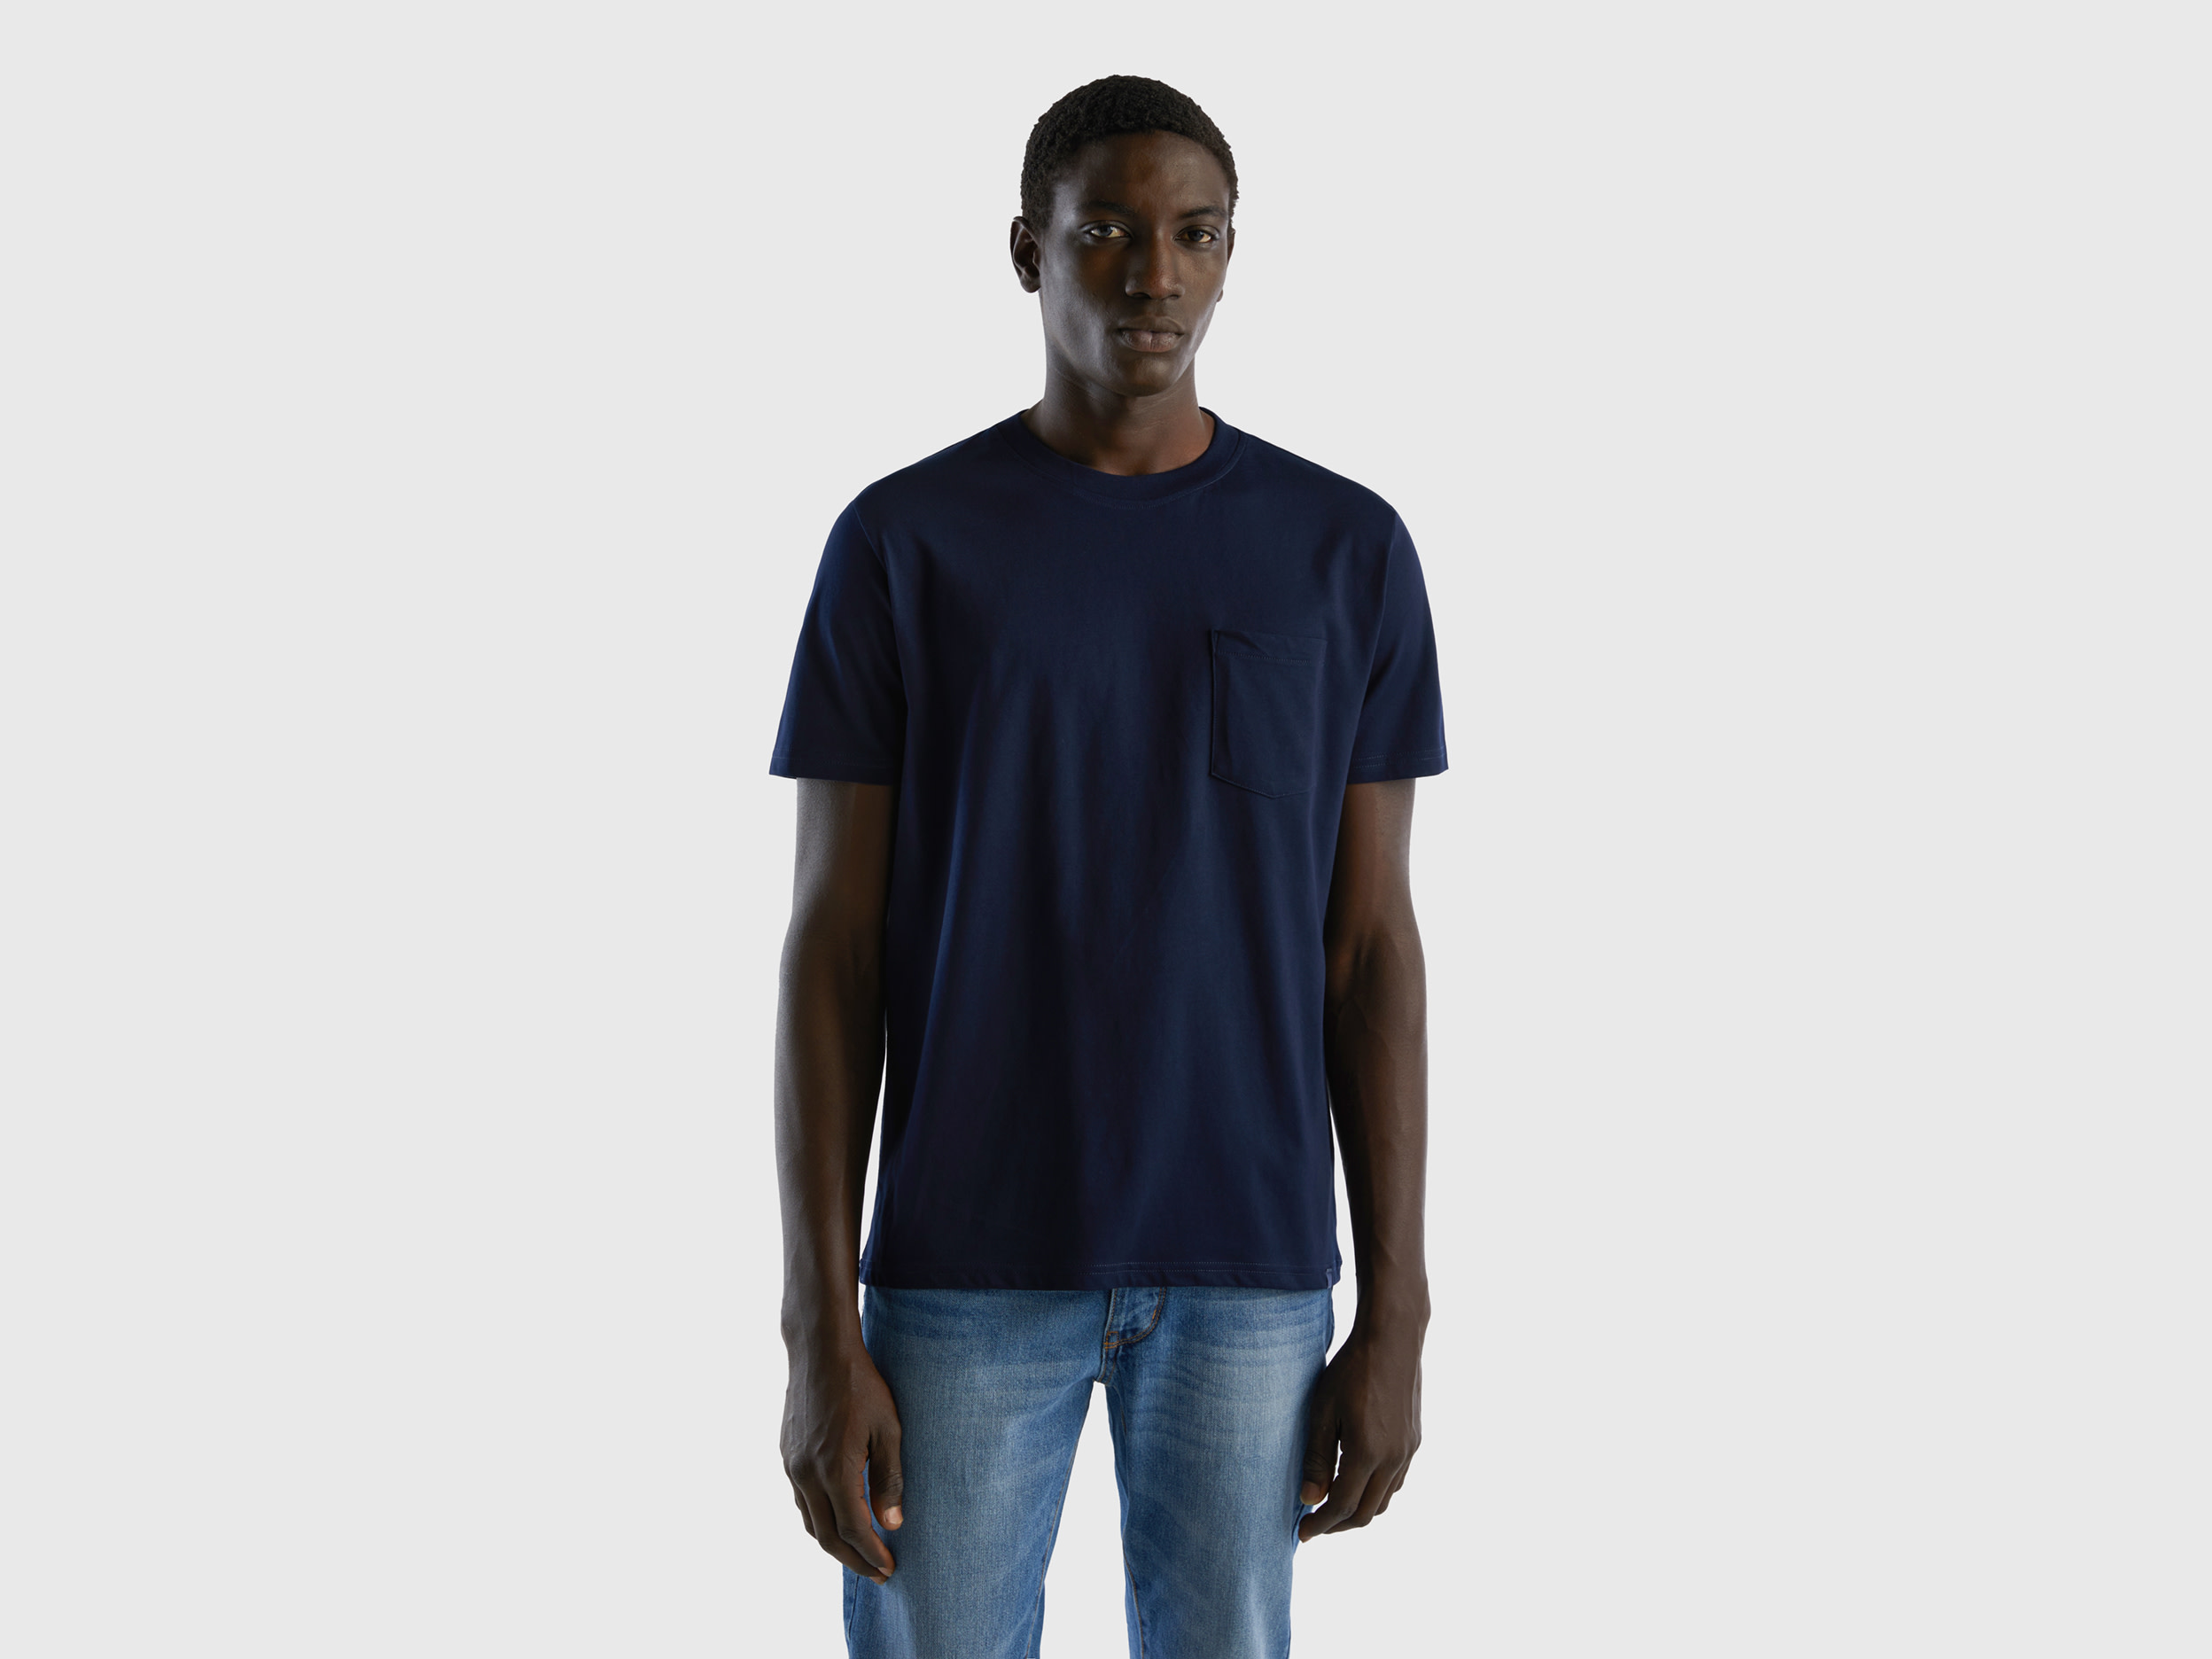 Benetton, 100% Cotton T-shirt With Pocket, size XS, Dark Blue, Men